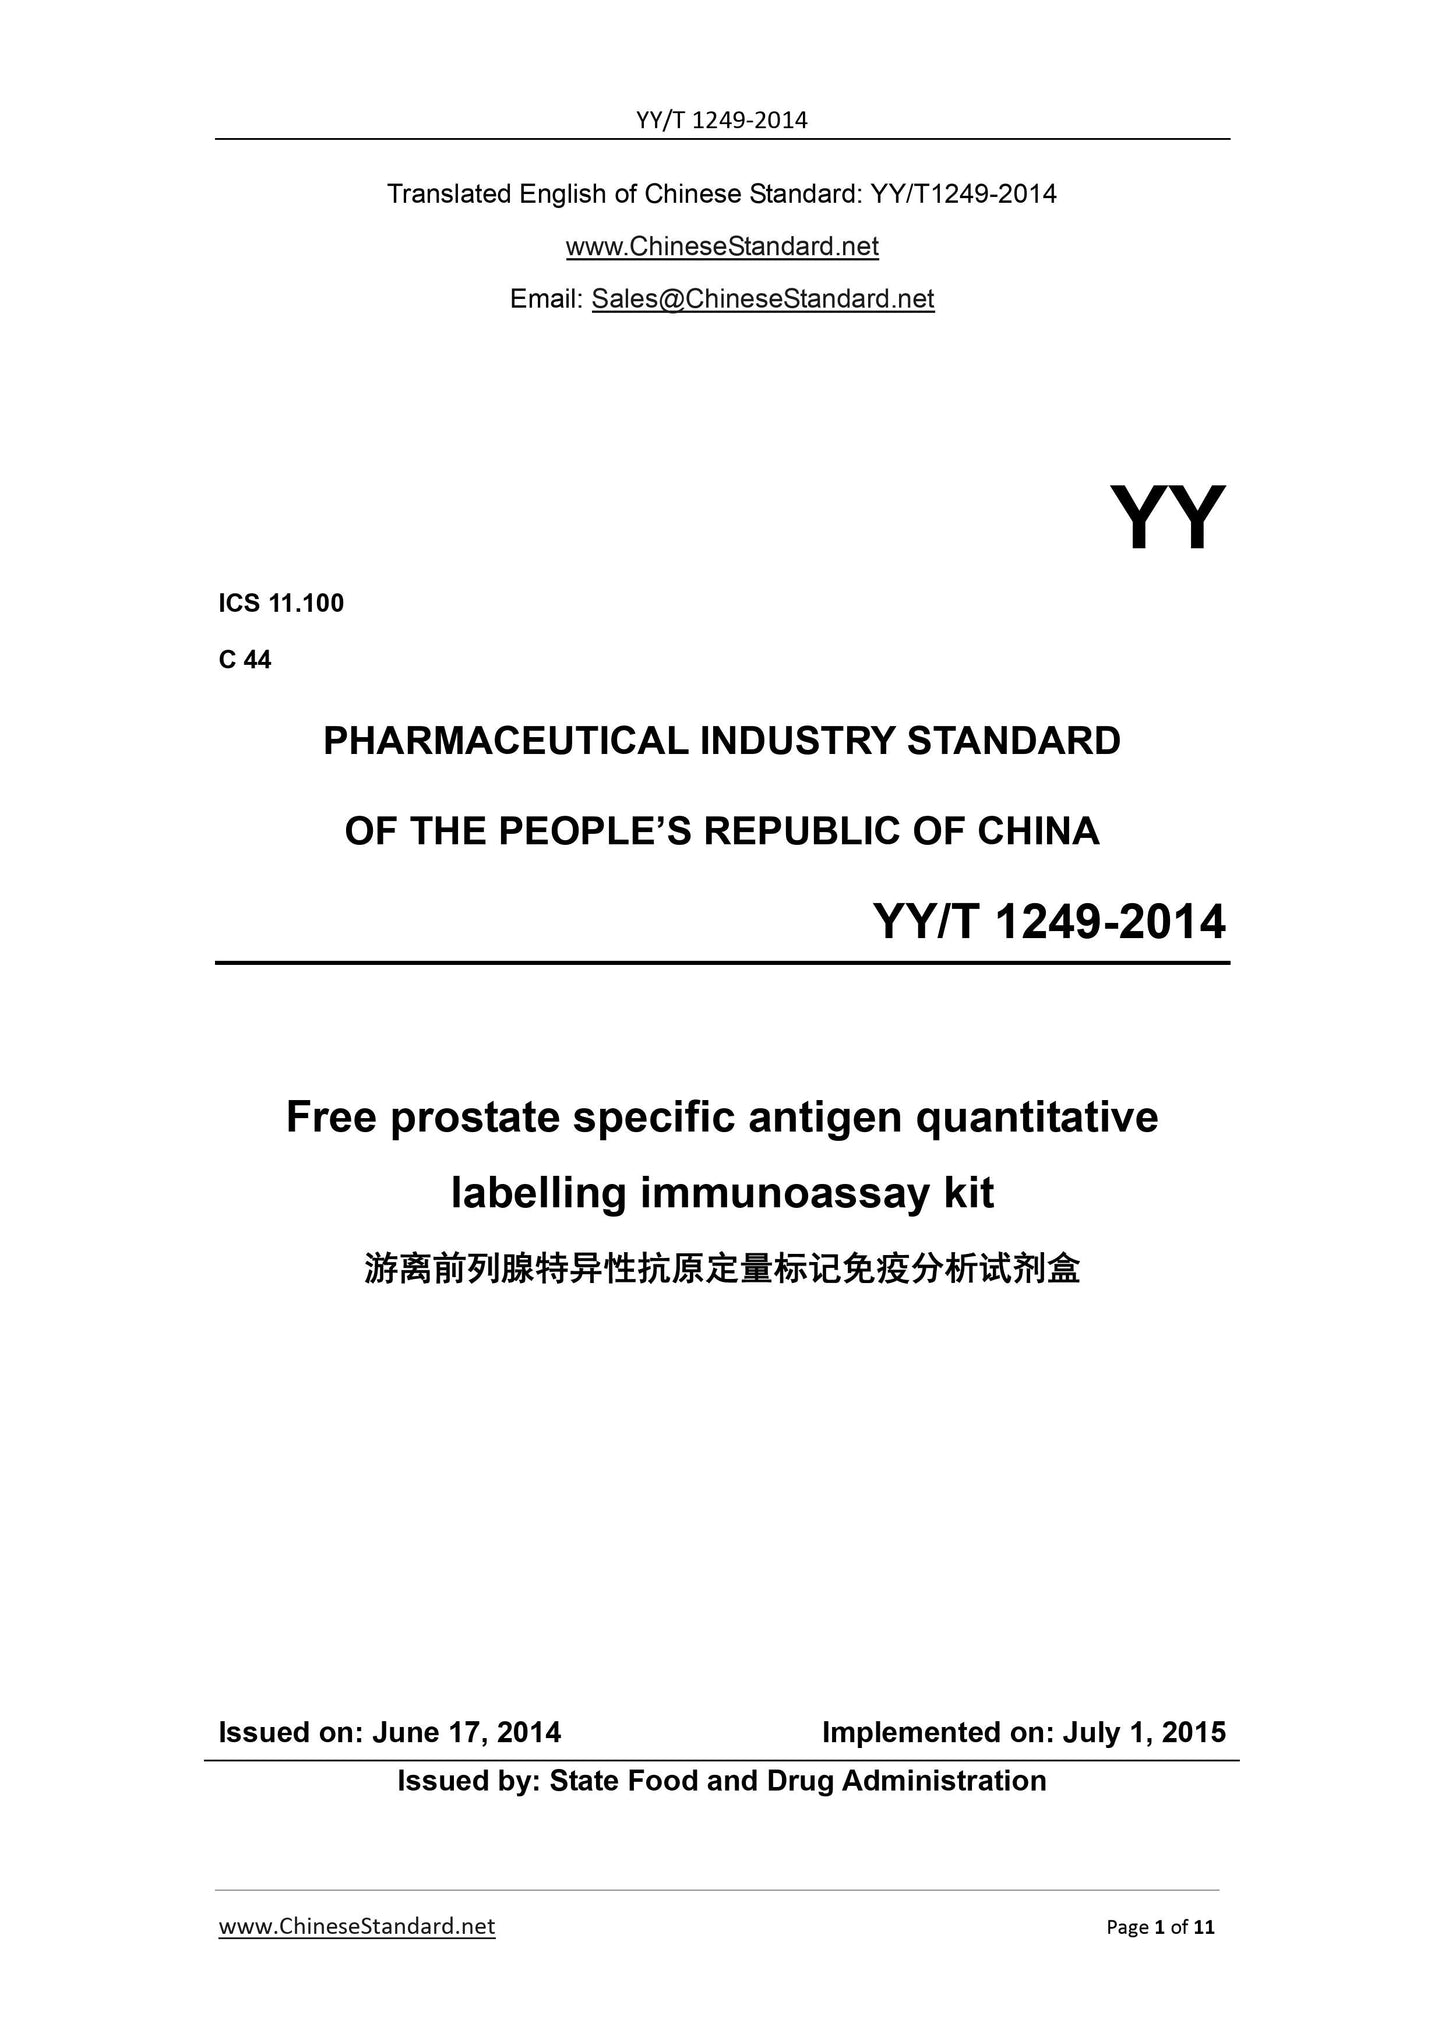 YY/T 1249-2014 Page 1